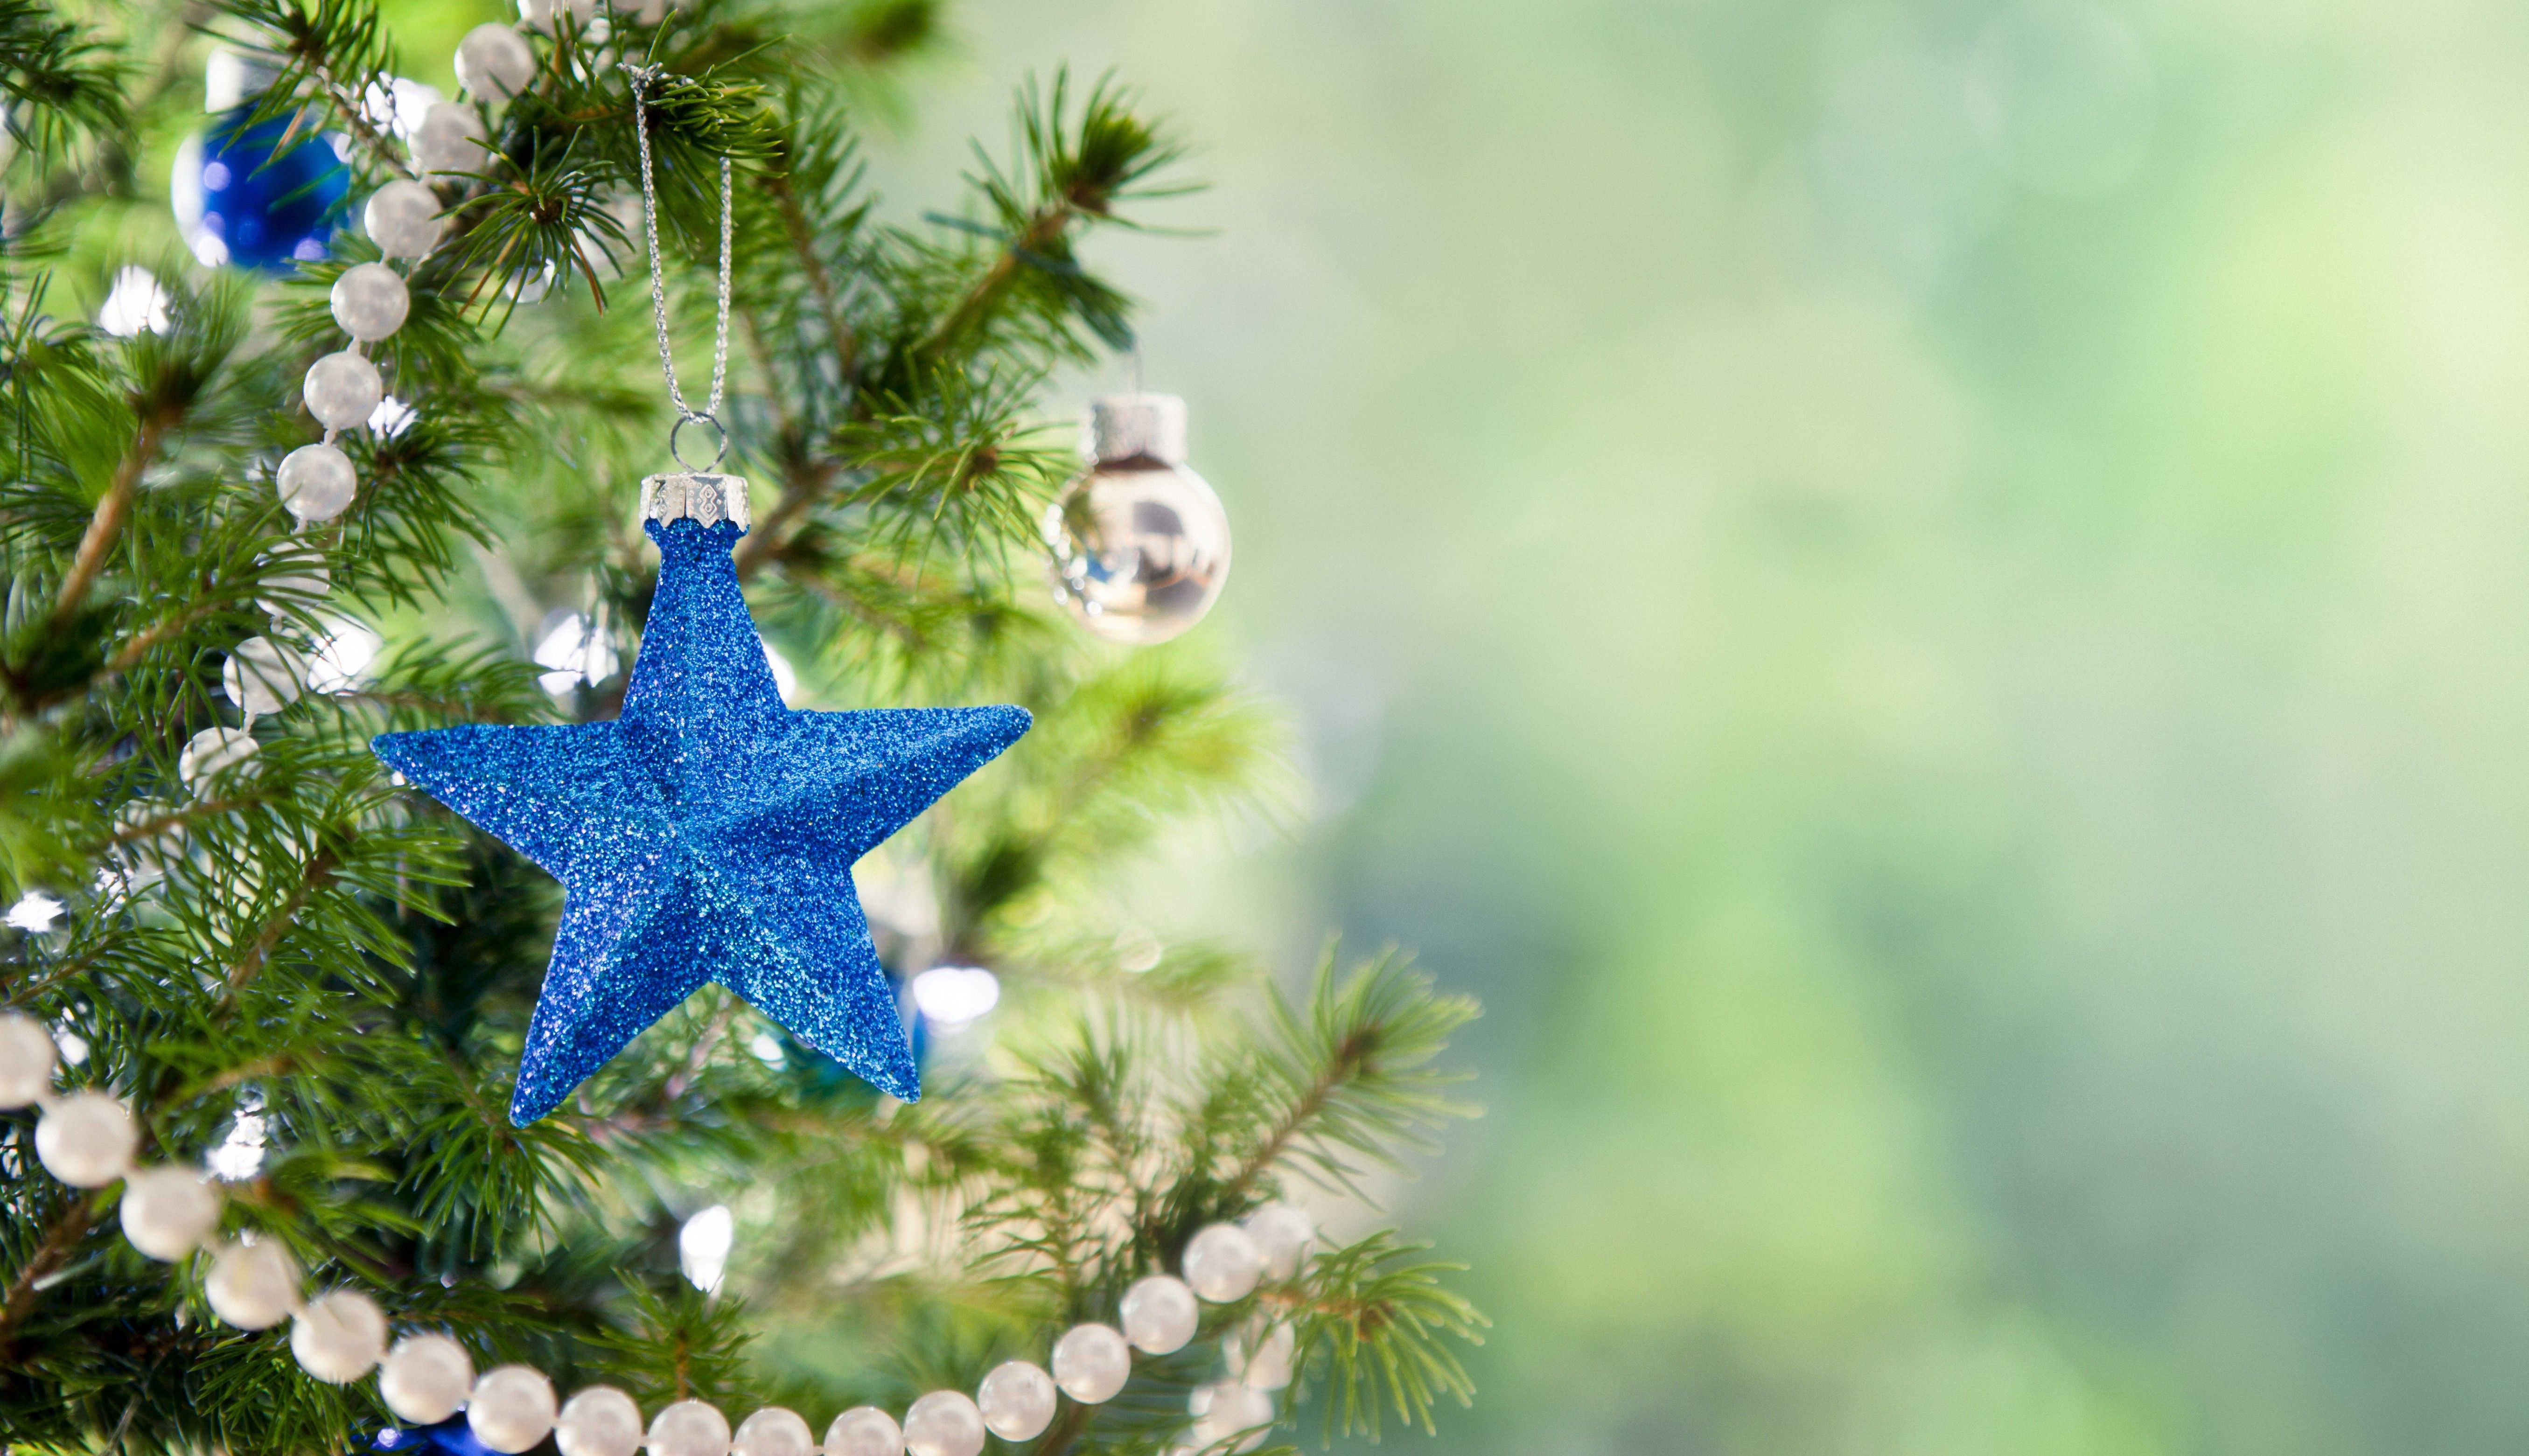 Blue star on the Christmas tree on Christmas Desktop wallpaper 1920x1200